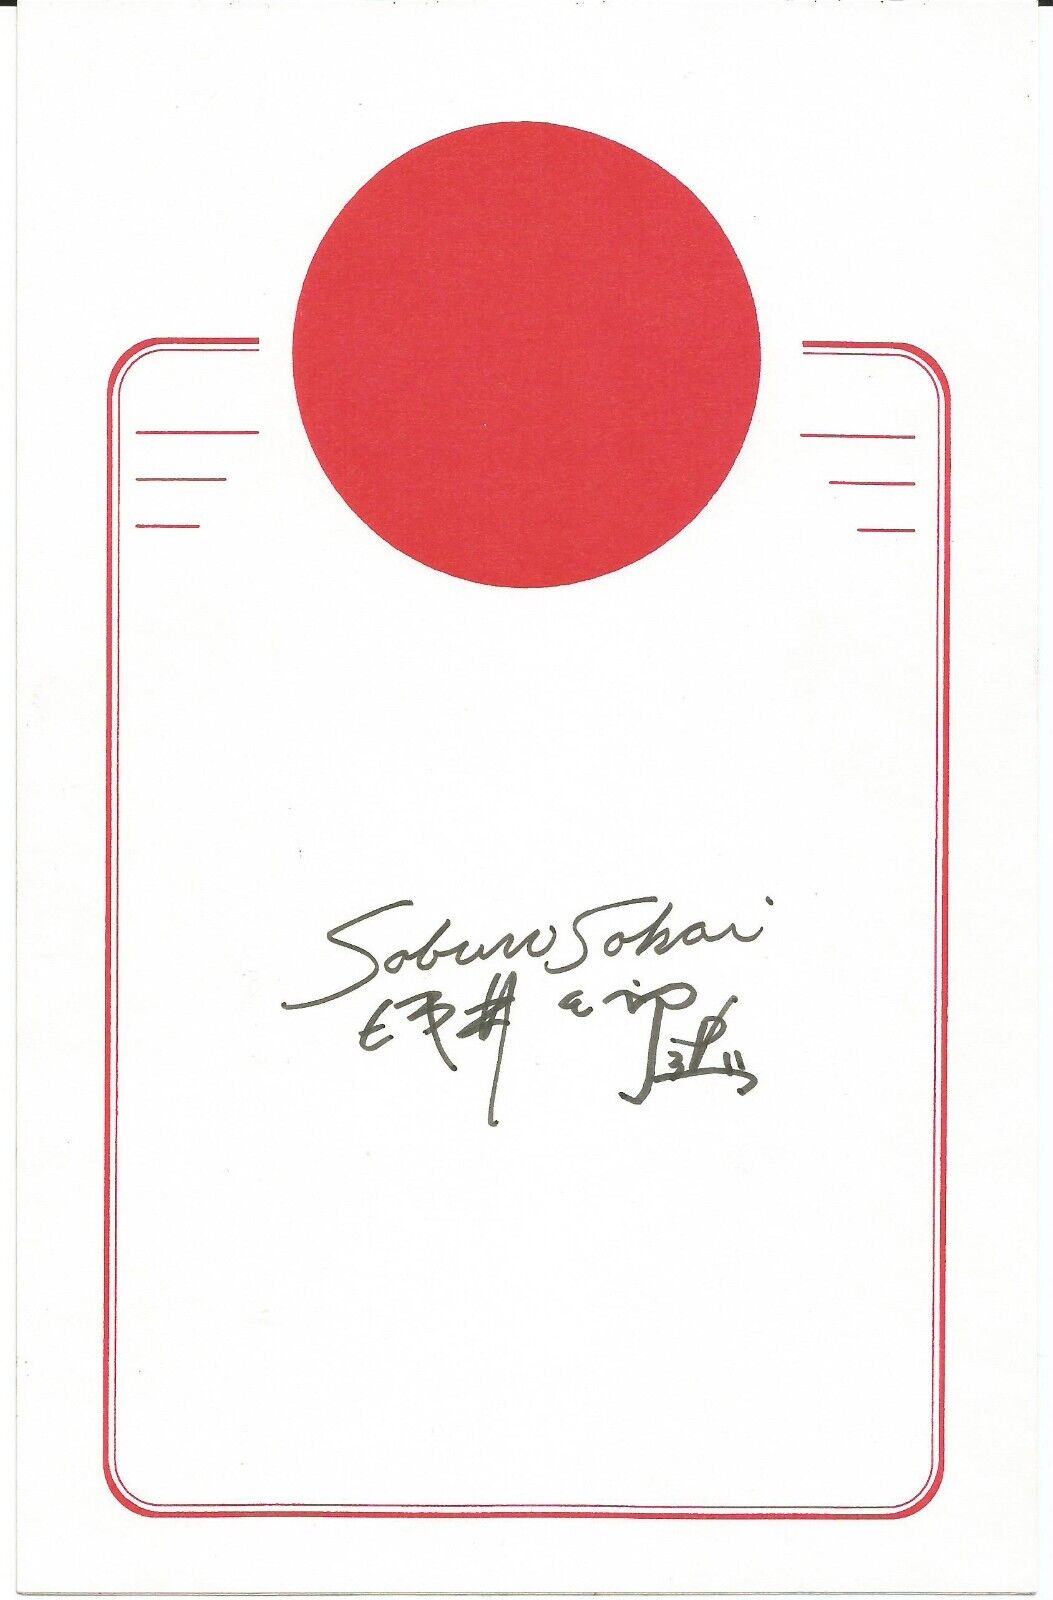 Autograph of Saburo Sakai, WWII Japanese Ace, Authenticity certified